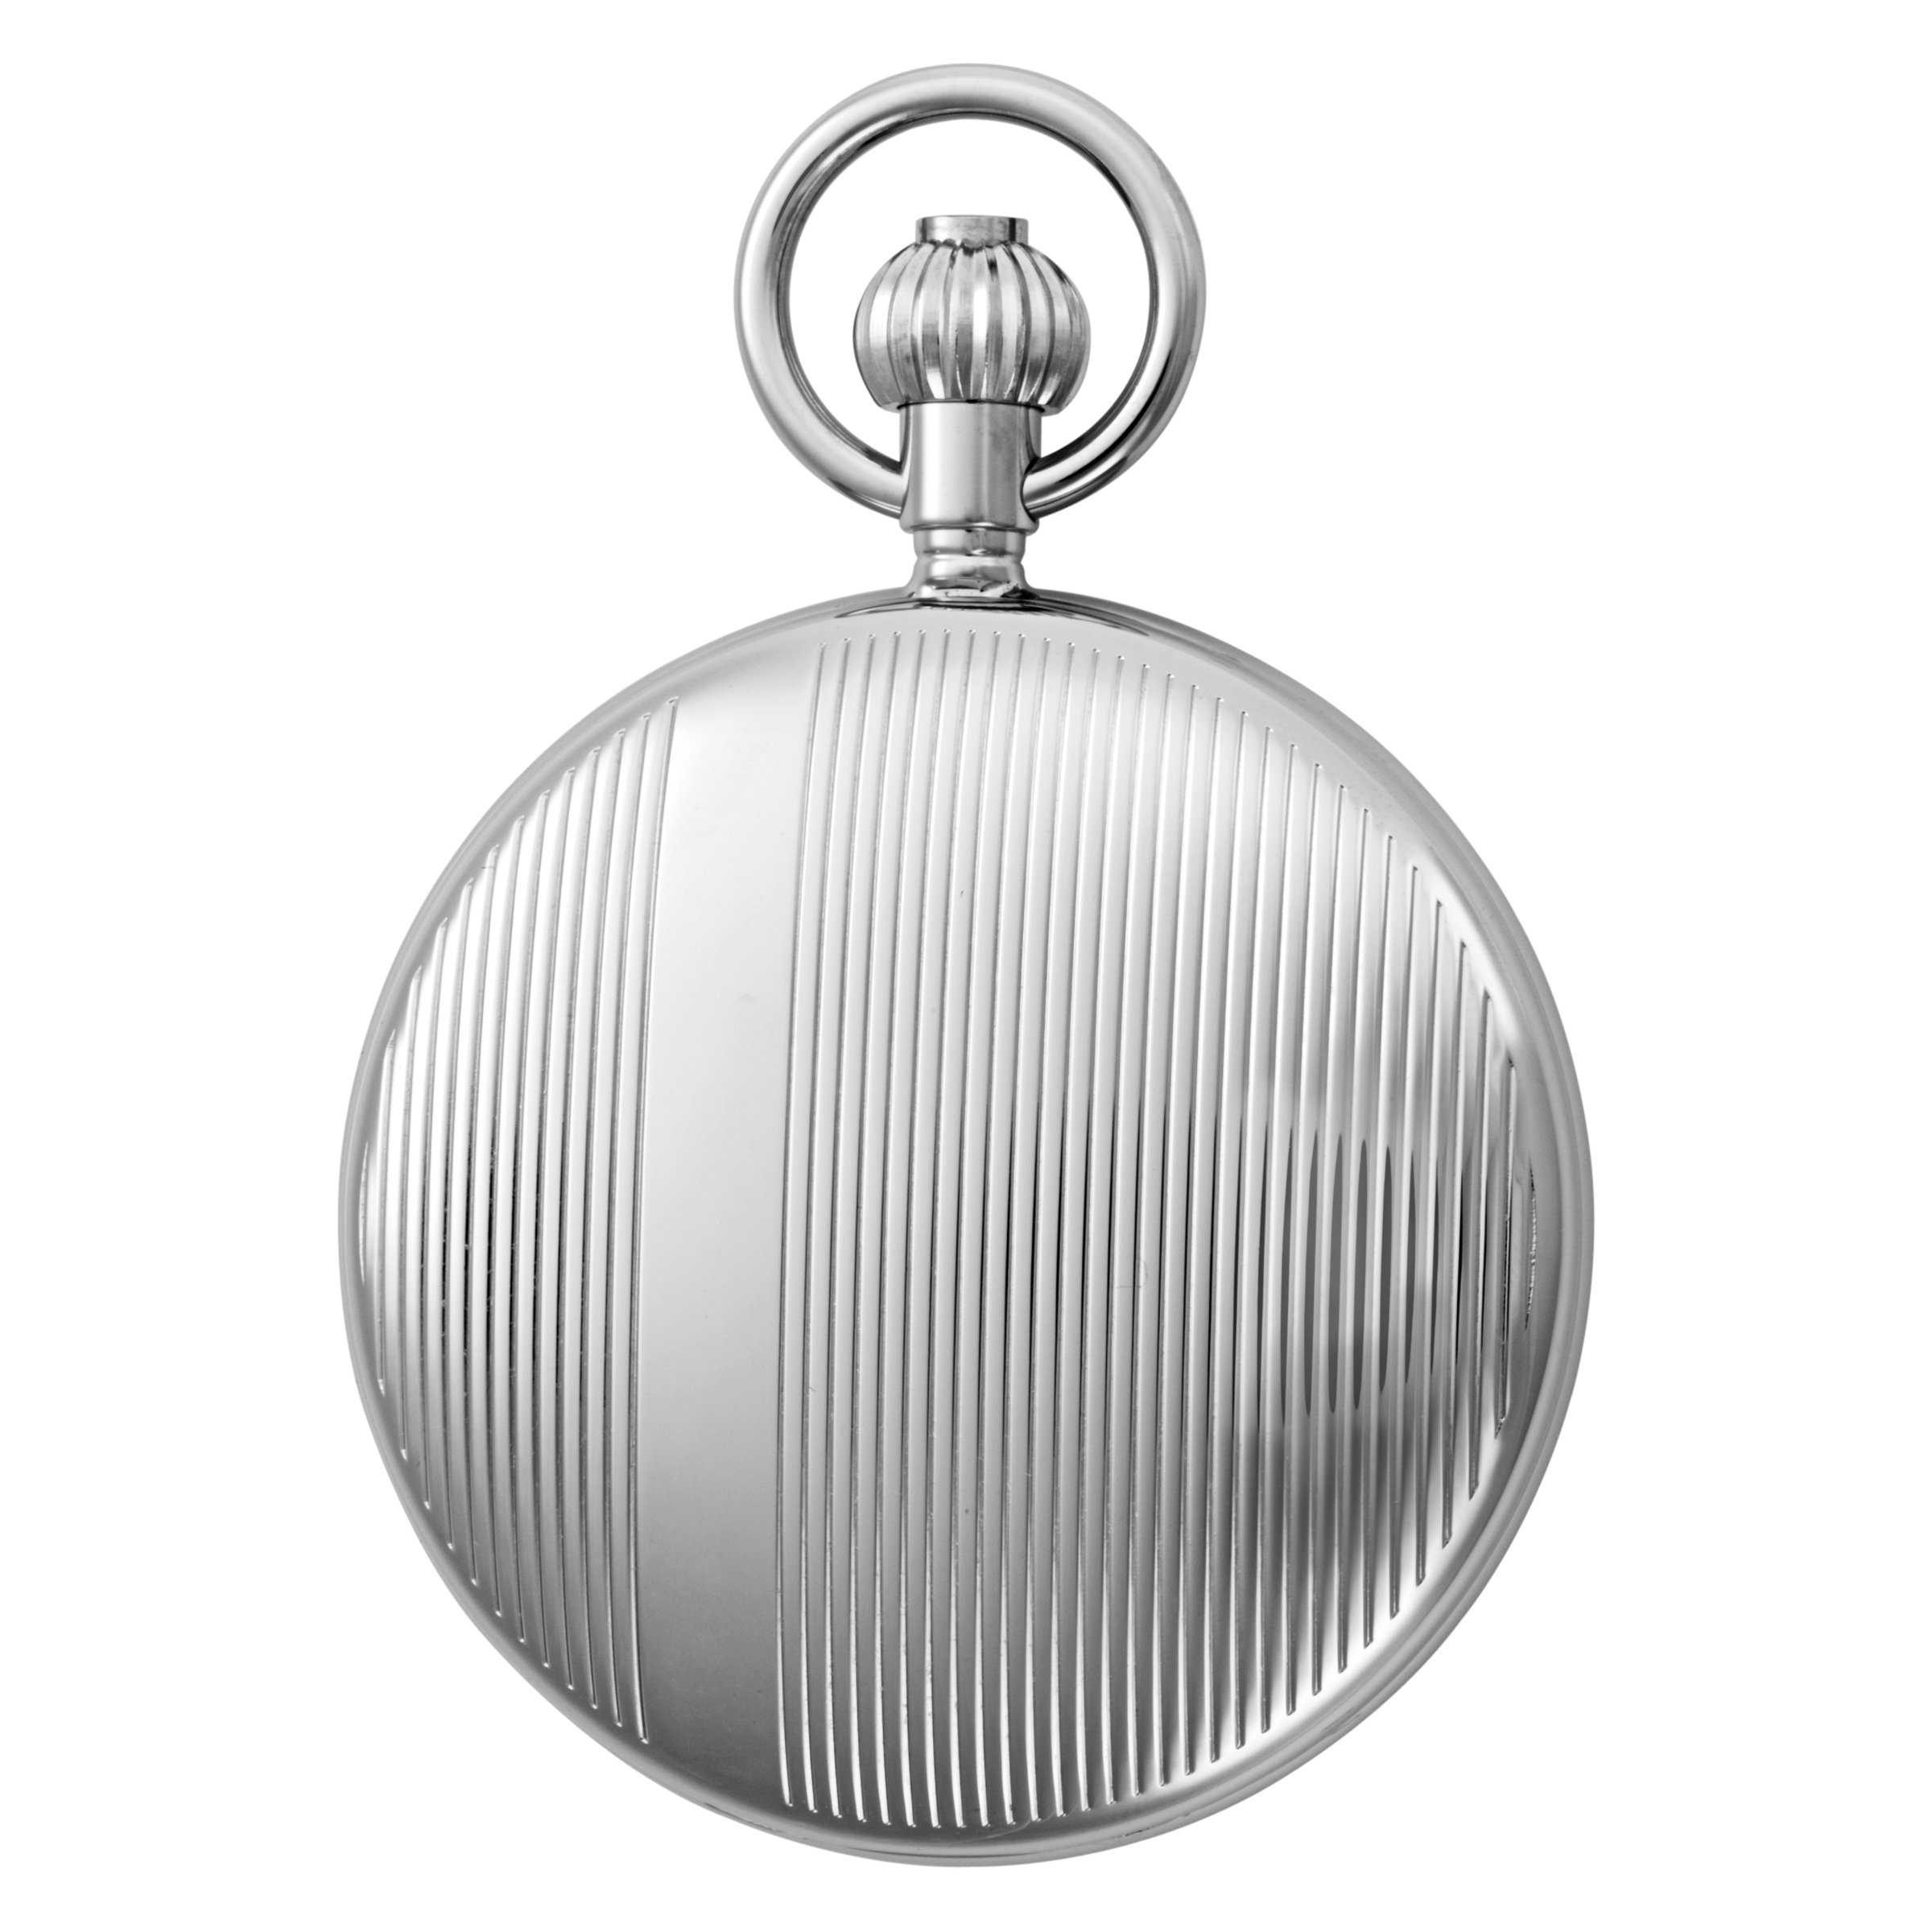 Charles-Hubert, Paris Quartz Pocket Watch